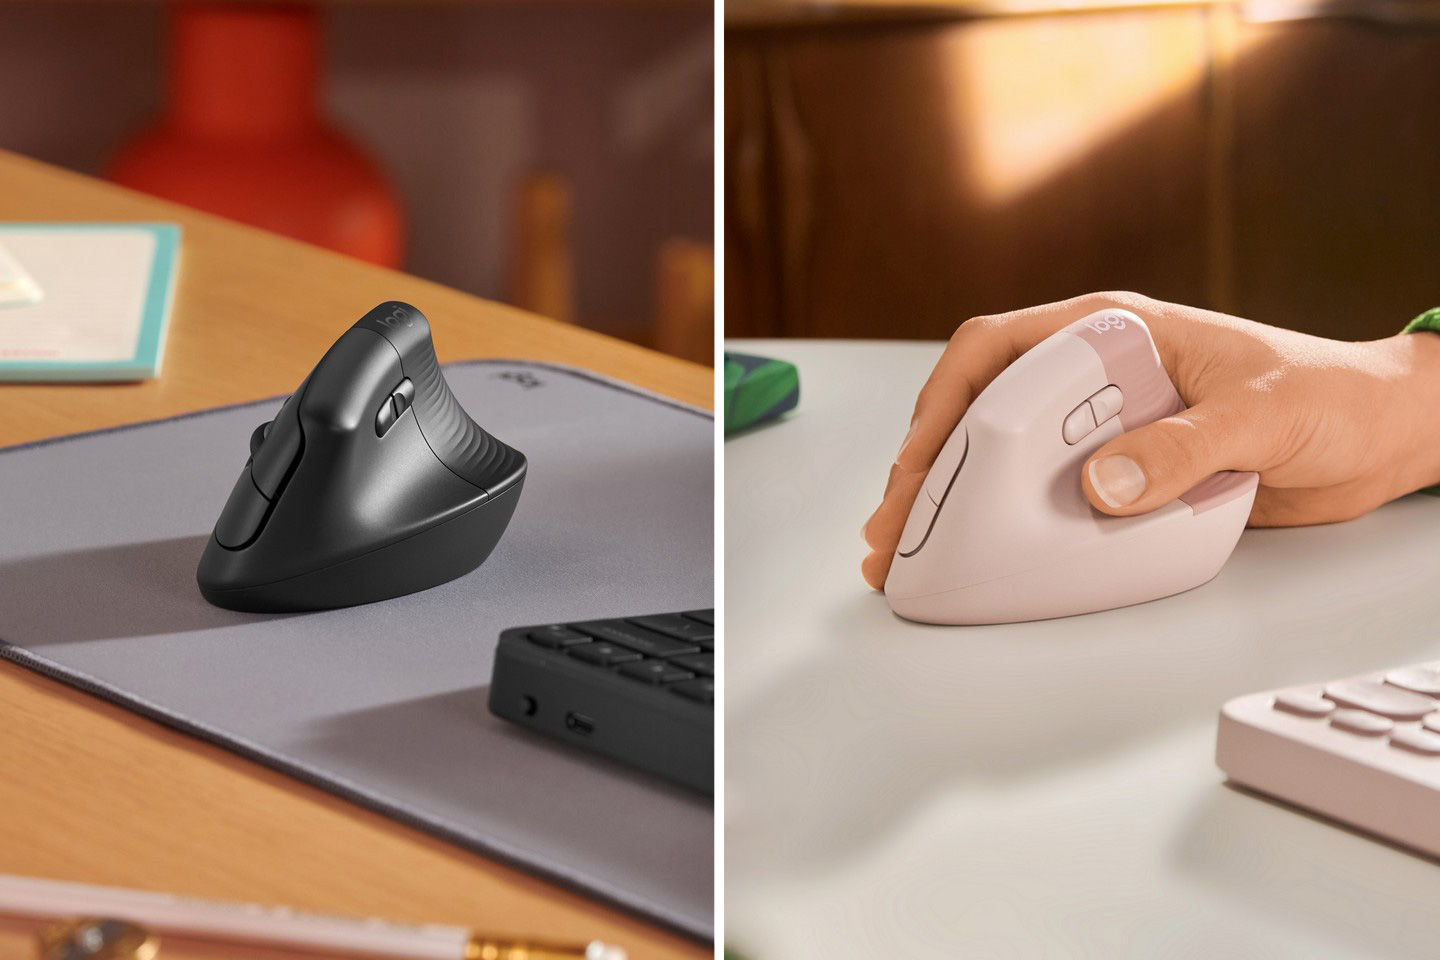 #Logitech unveils the Lift Vertical – A $69 ergonomic mouse designed for the WFH lifestyle